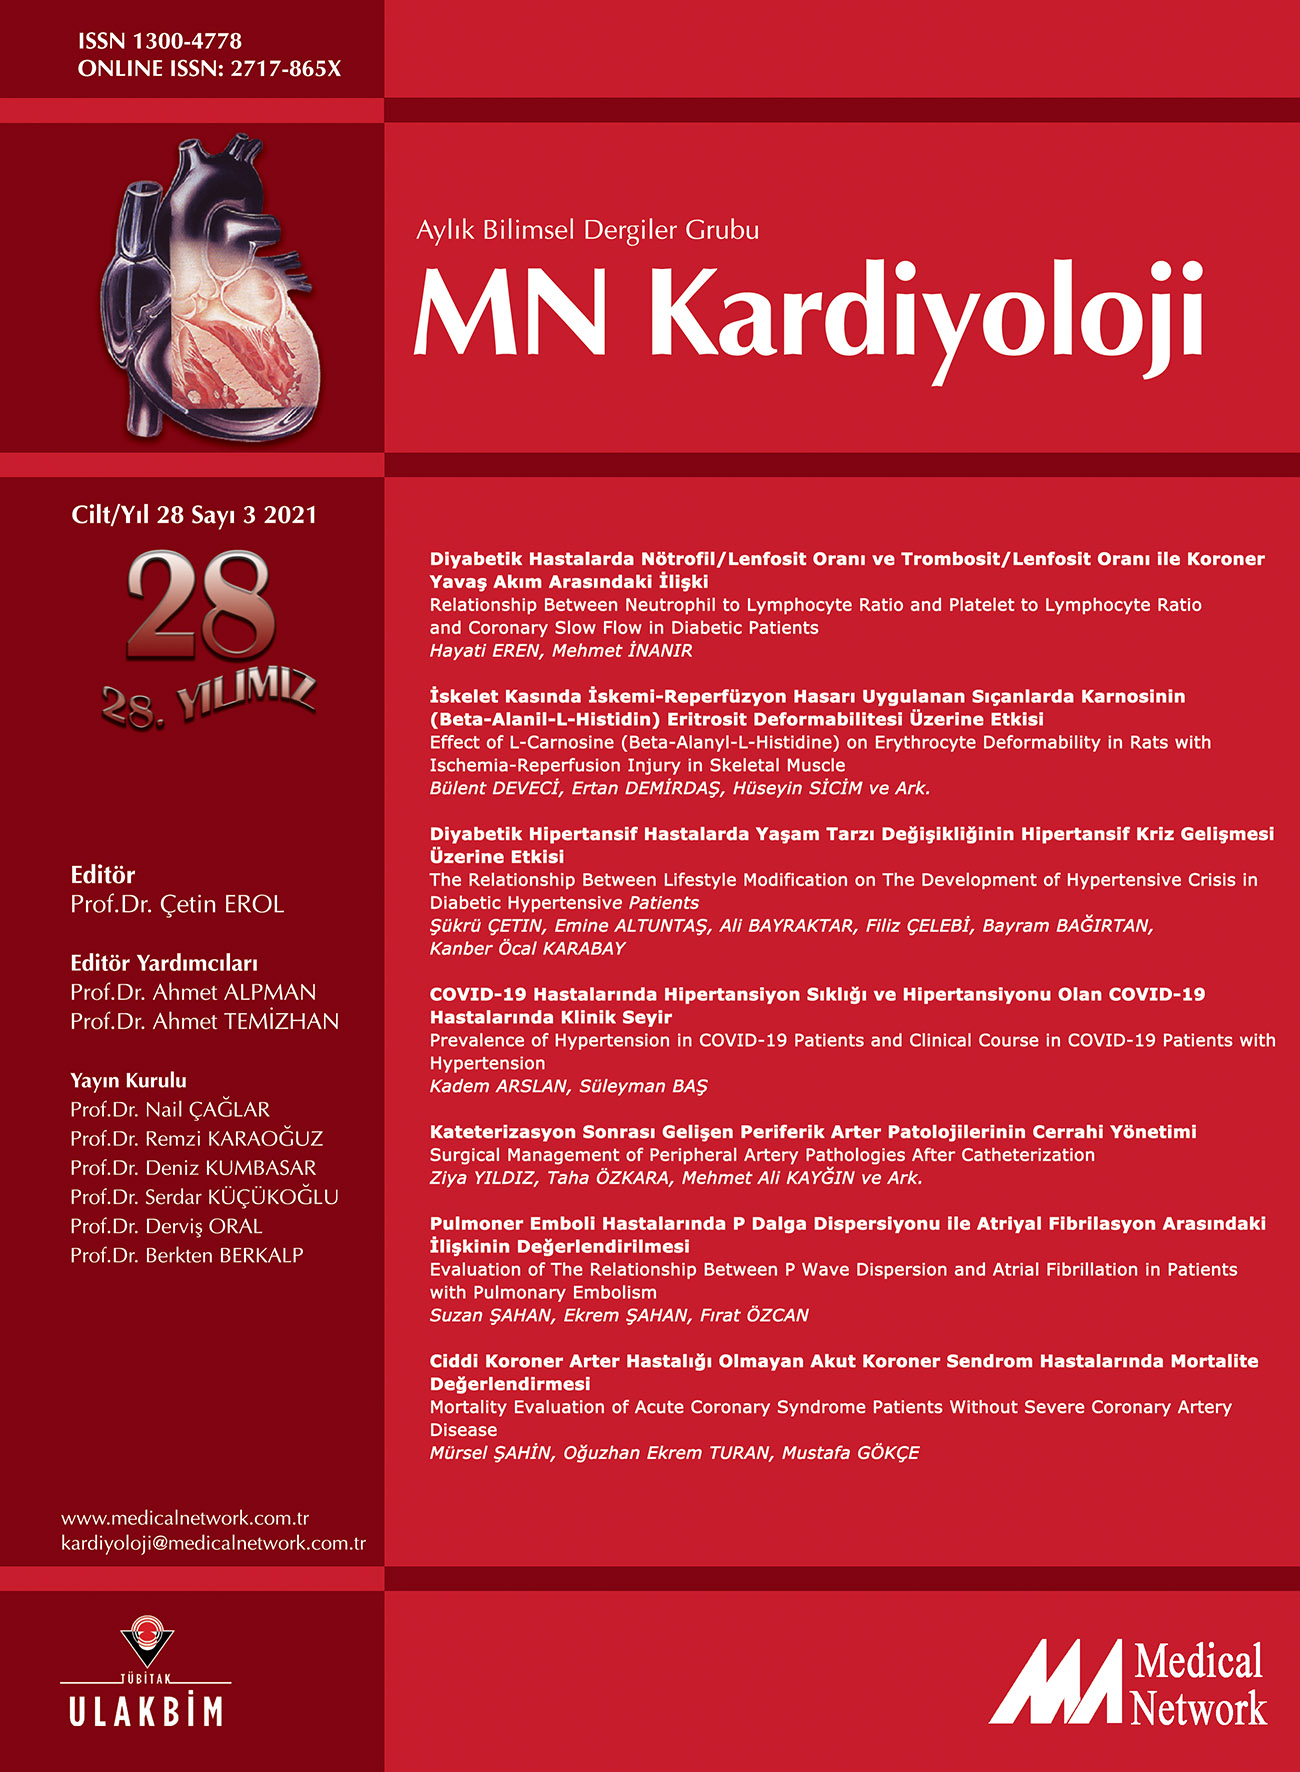 <p>MN Kardiyoloji Cilt: 28 Say: 3 2021 MN Cardiology Volume: 28 No: 3 2021</p>